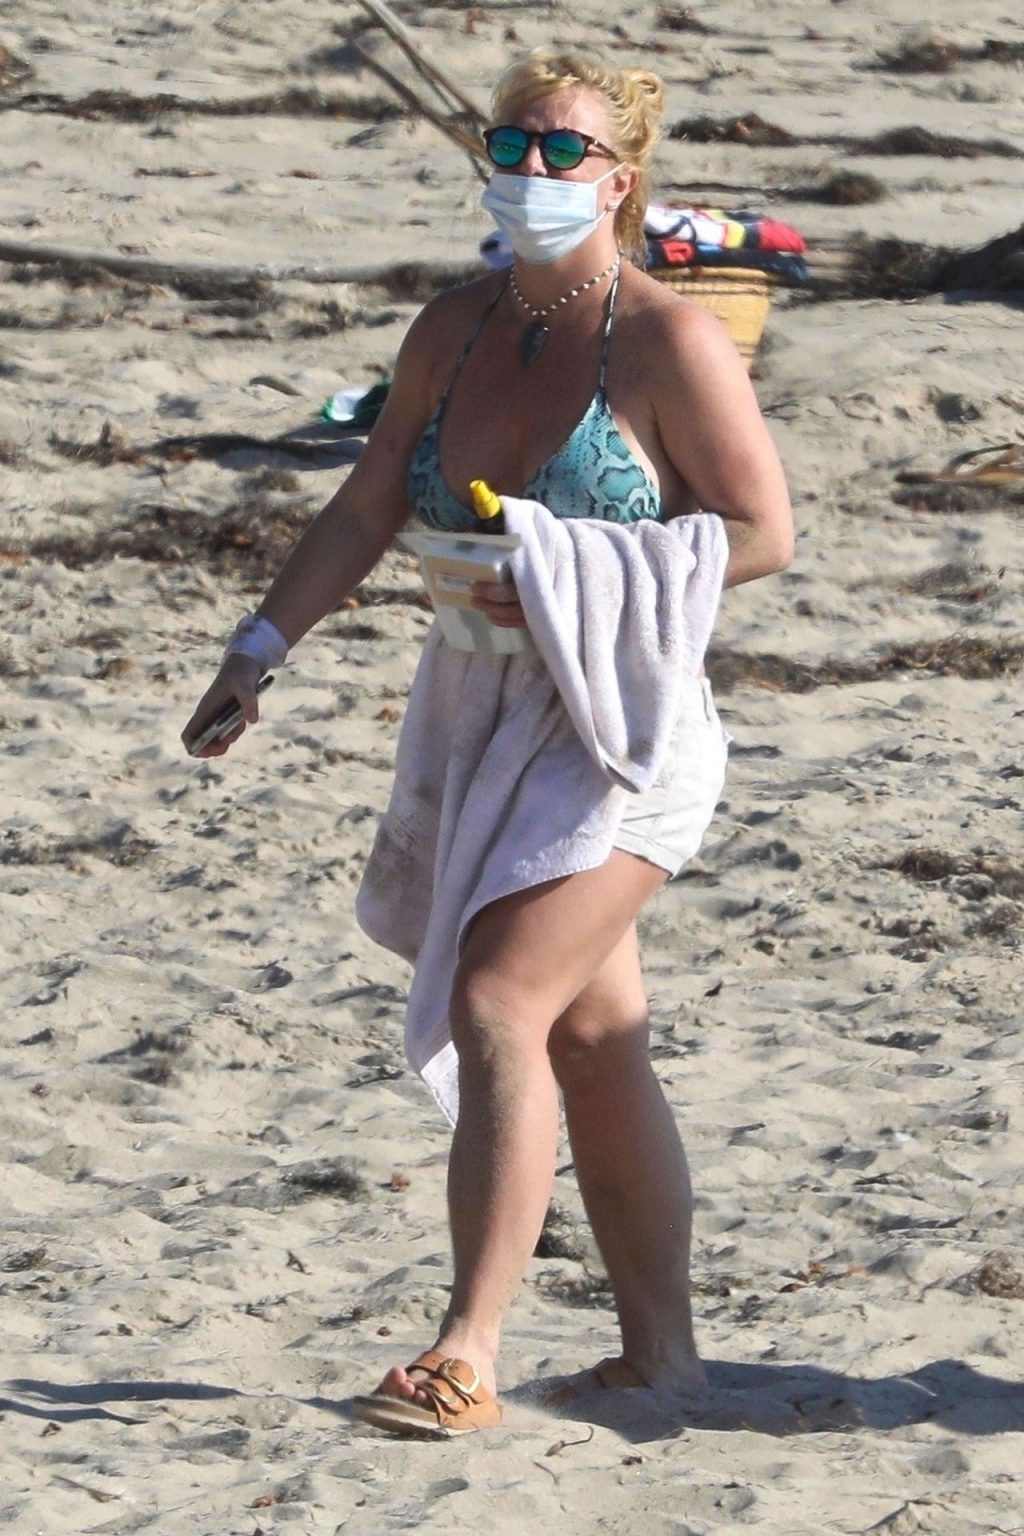 Britney Spears Displays Her Bikini Body as She Sunbathes at the Beach in Malibu (84 Photos)